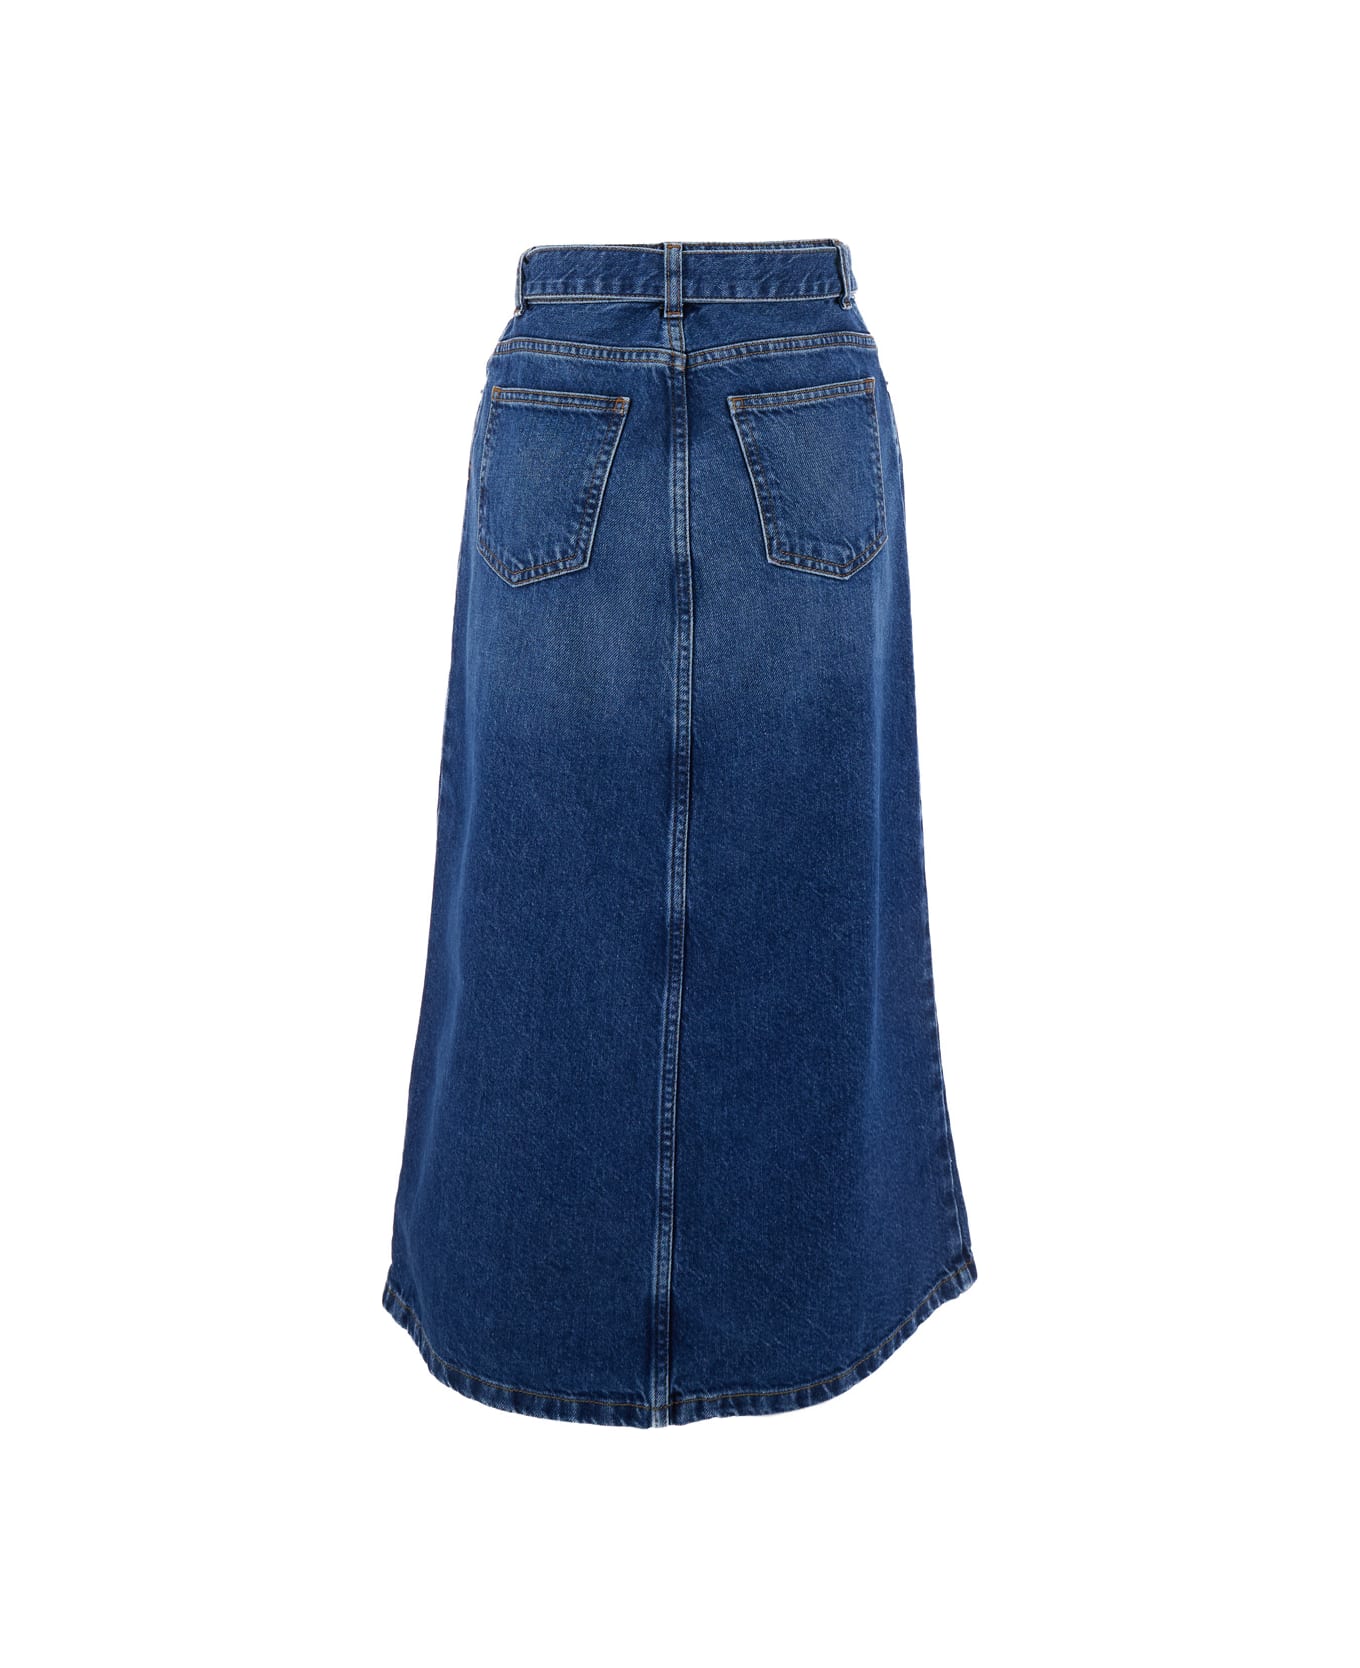 TwinSet Denim Skirt - Denim スカート